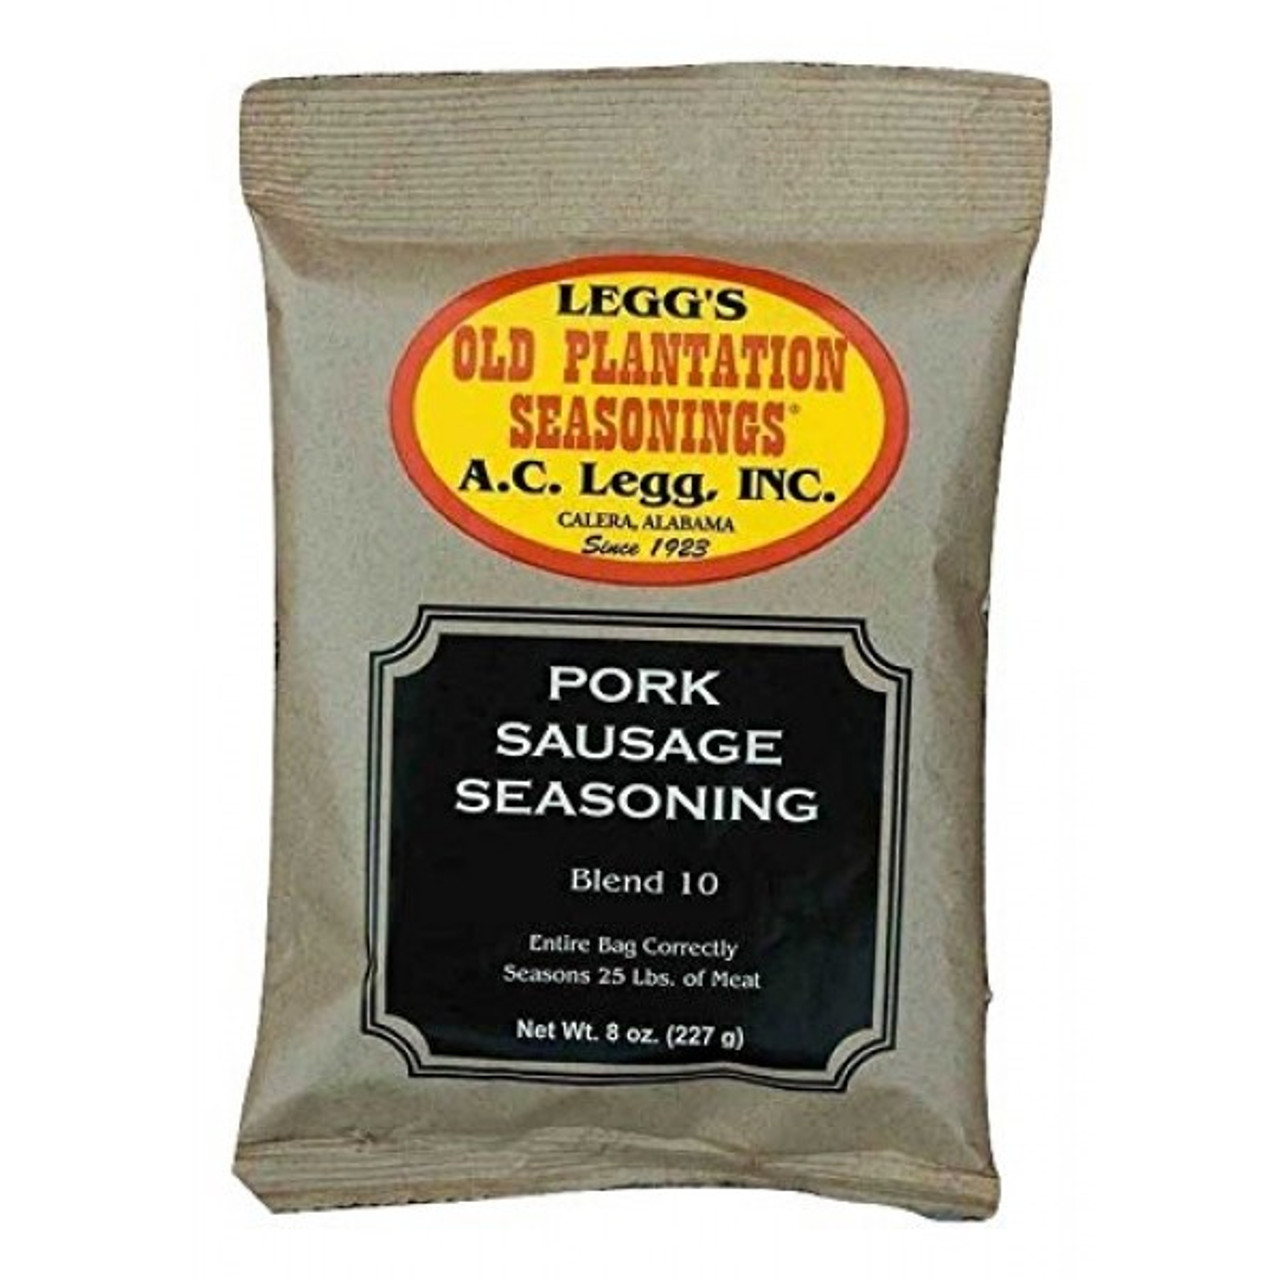 Blend # 10 - Legg's Old Plantation Regular Pork Sausage Seasoning